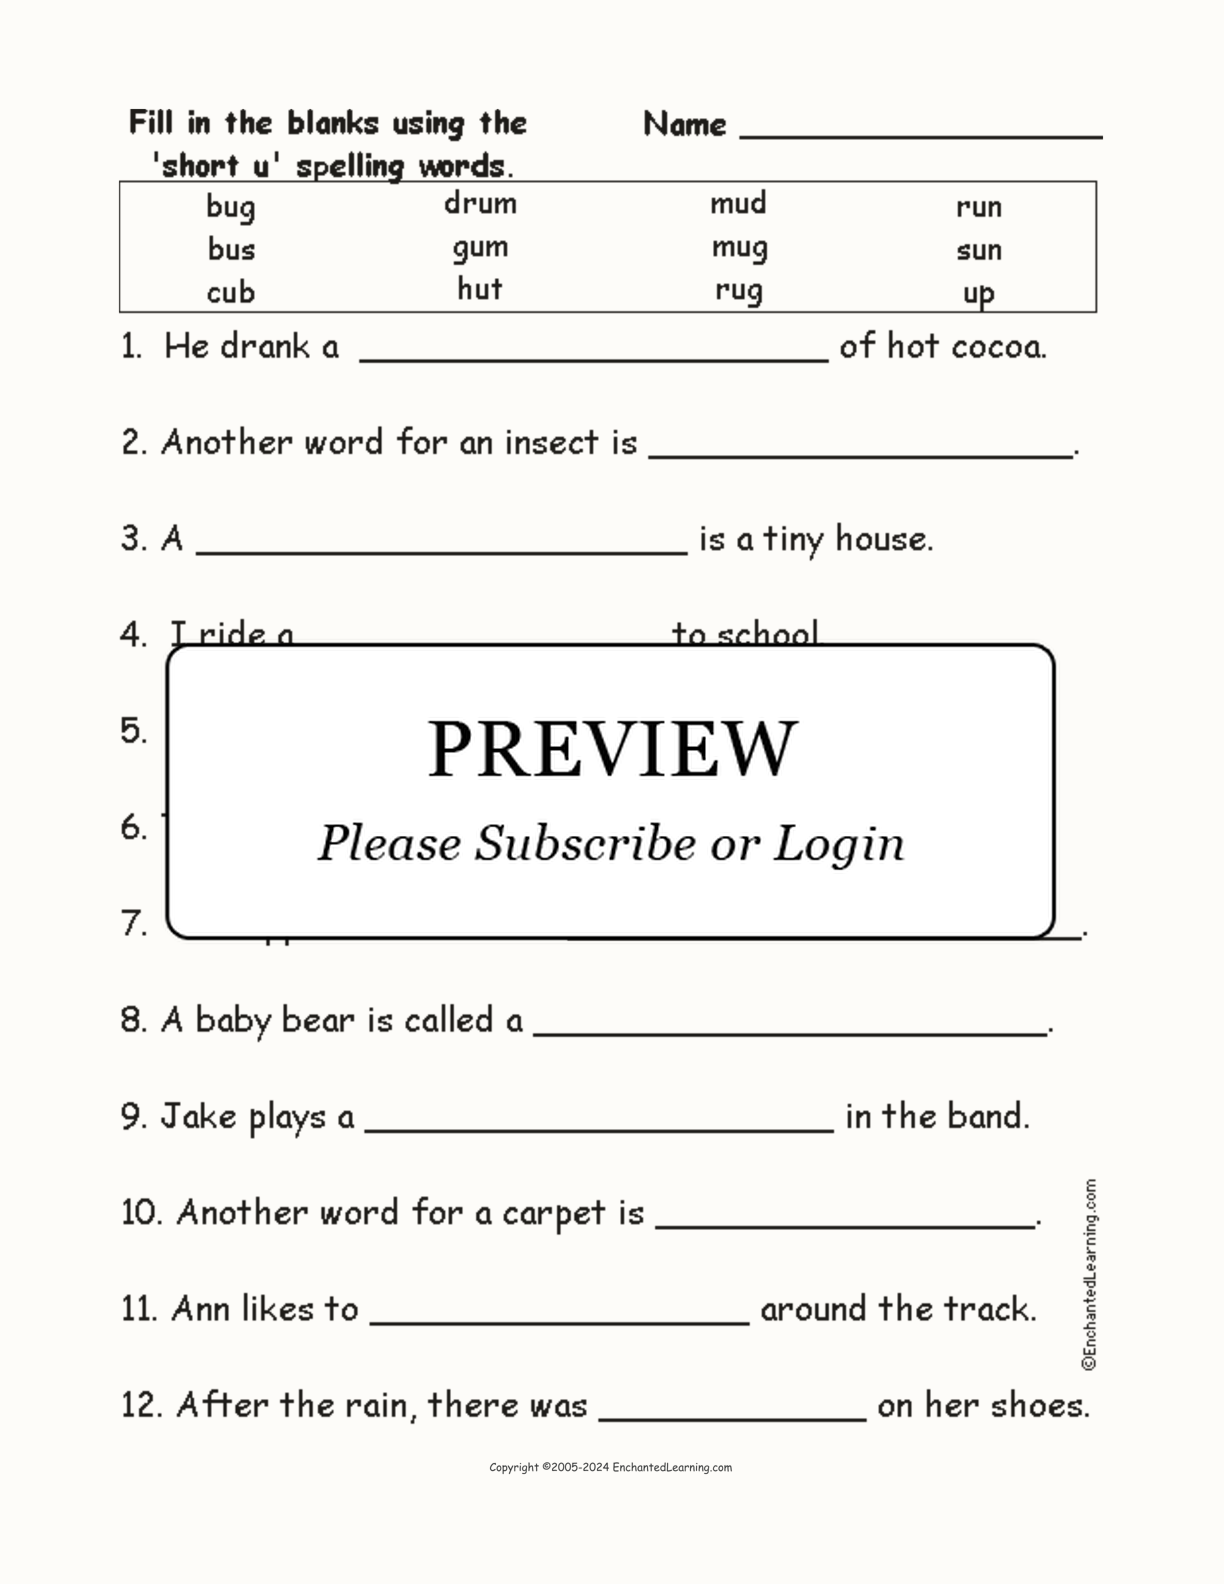 Short U: Spelling Word Questions interactive worksheet page 1